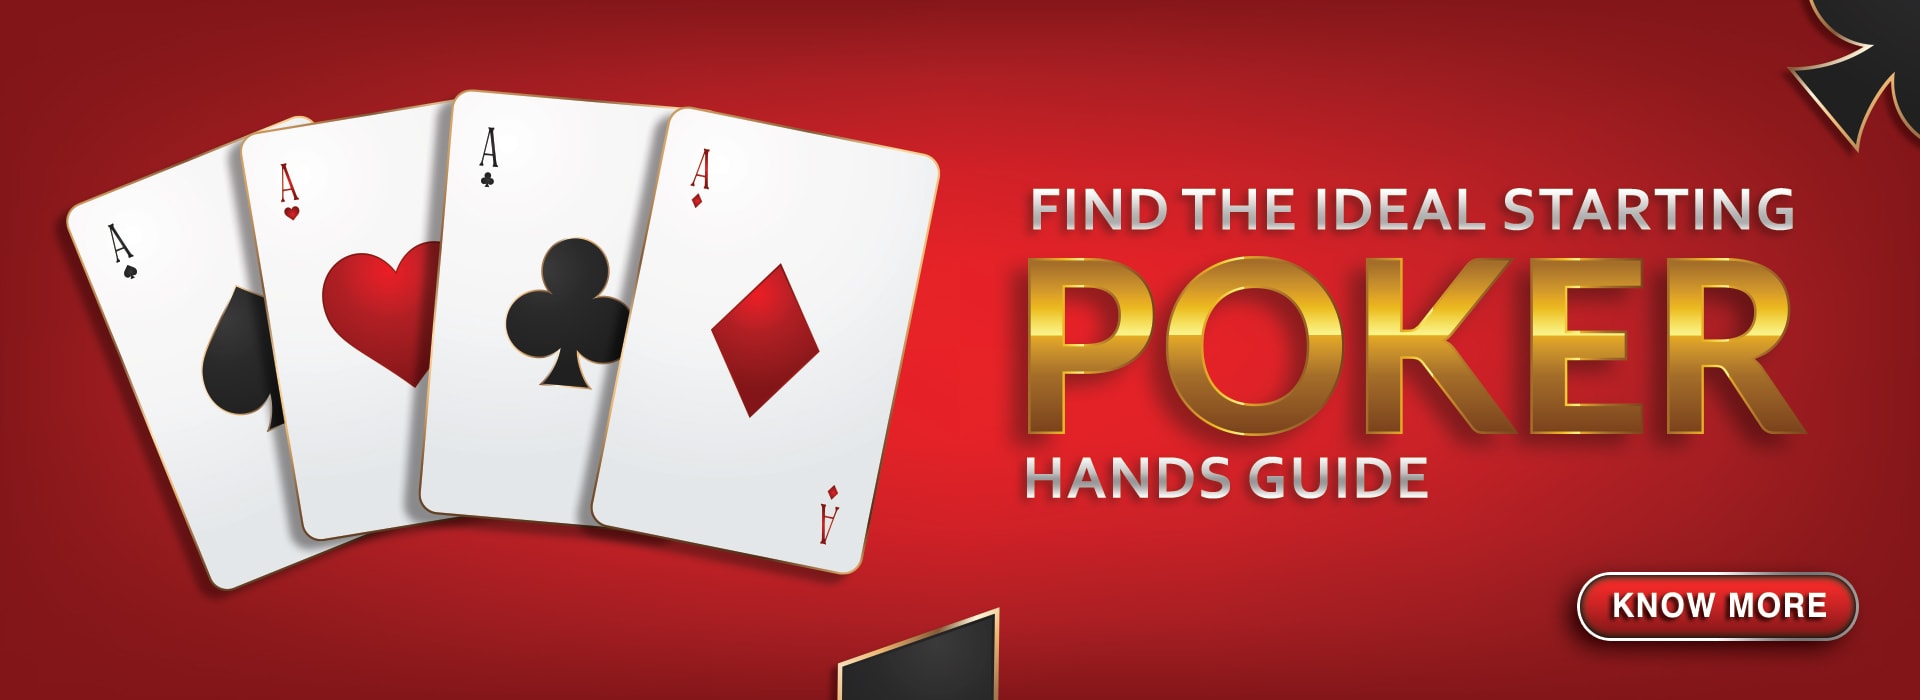 poker hands guide